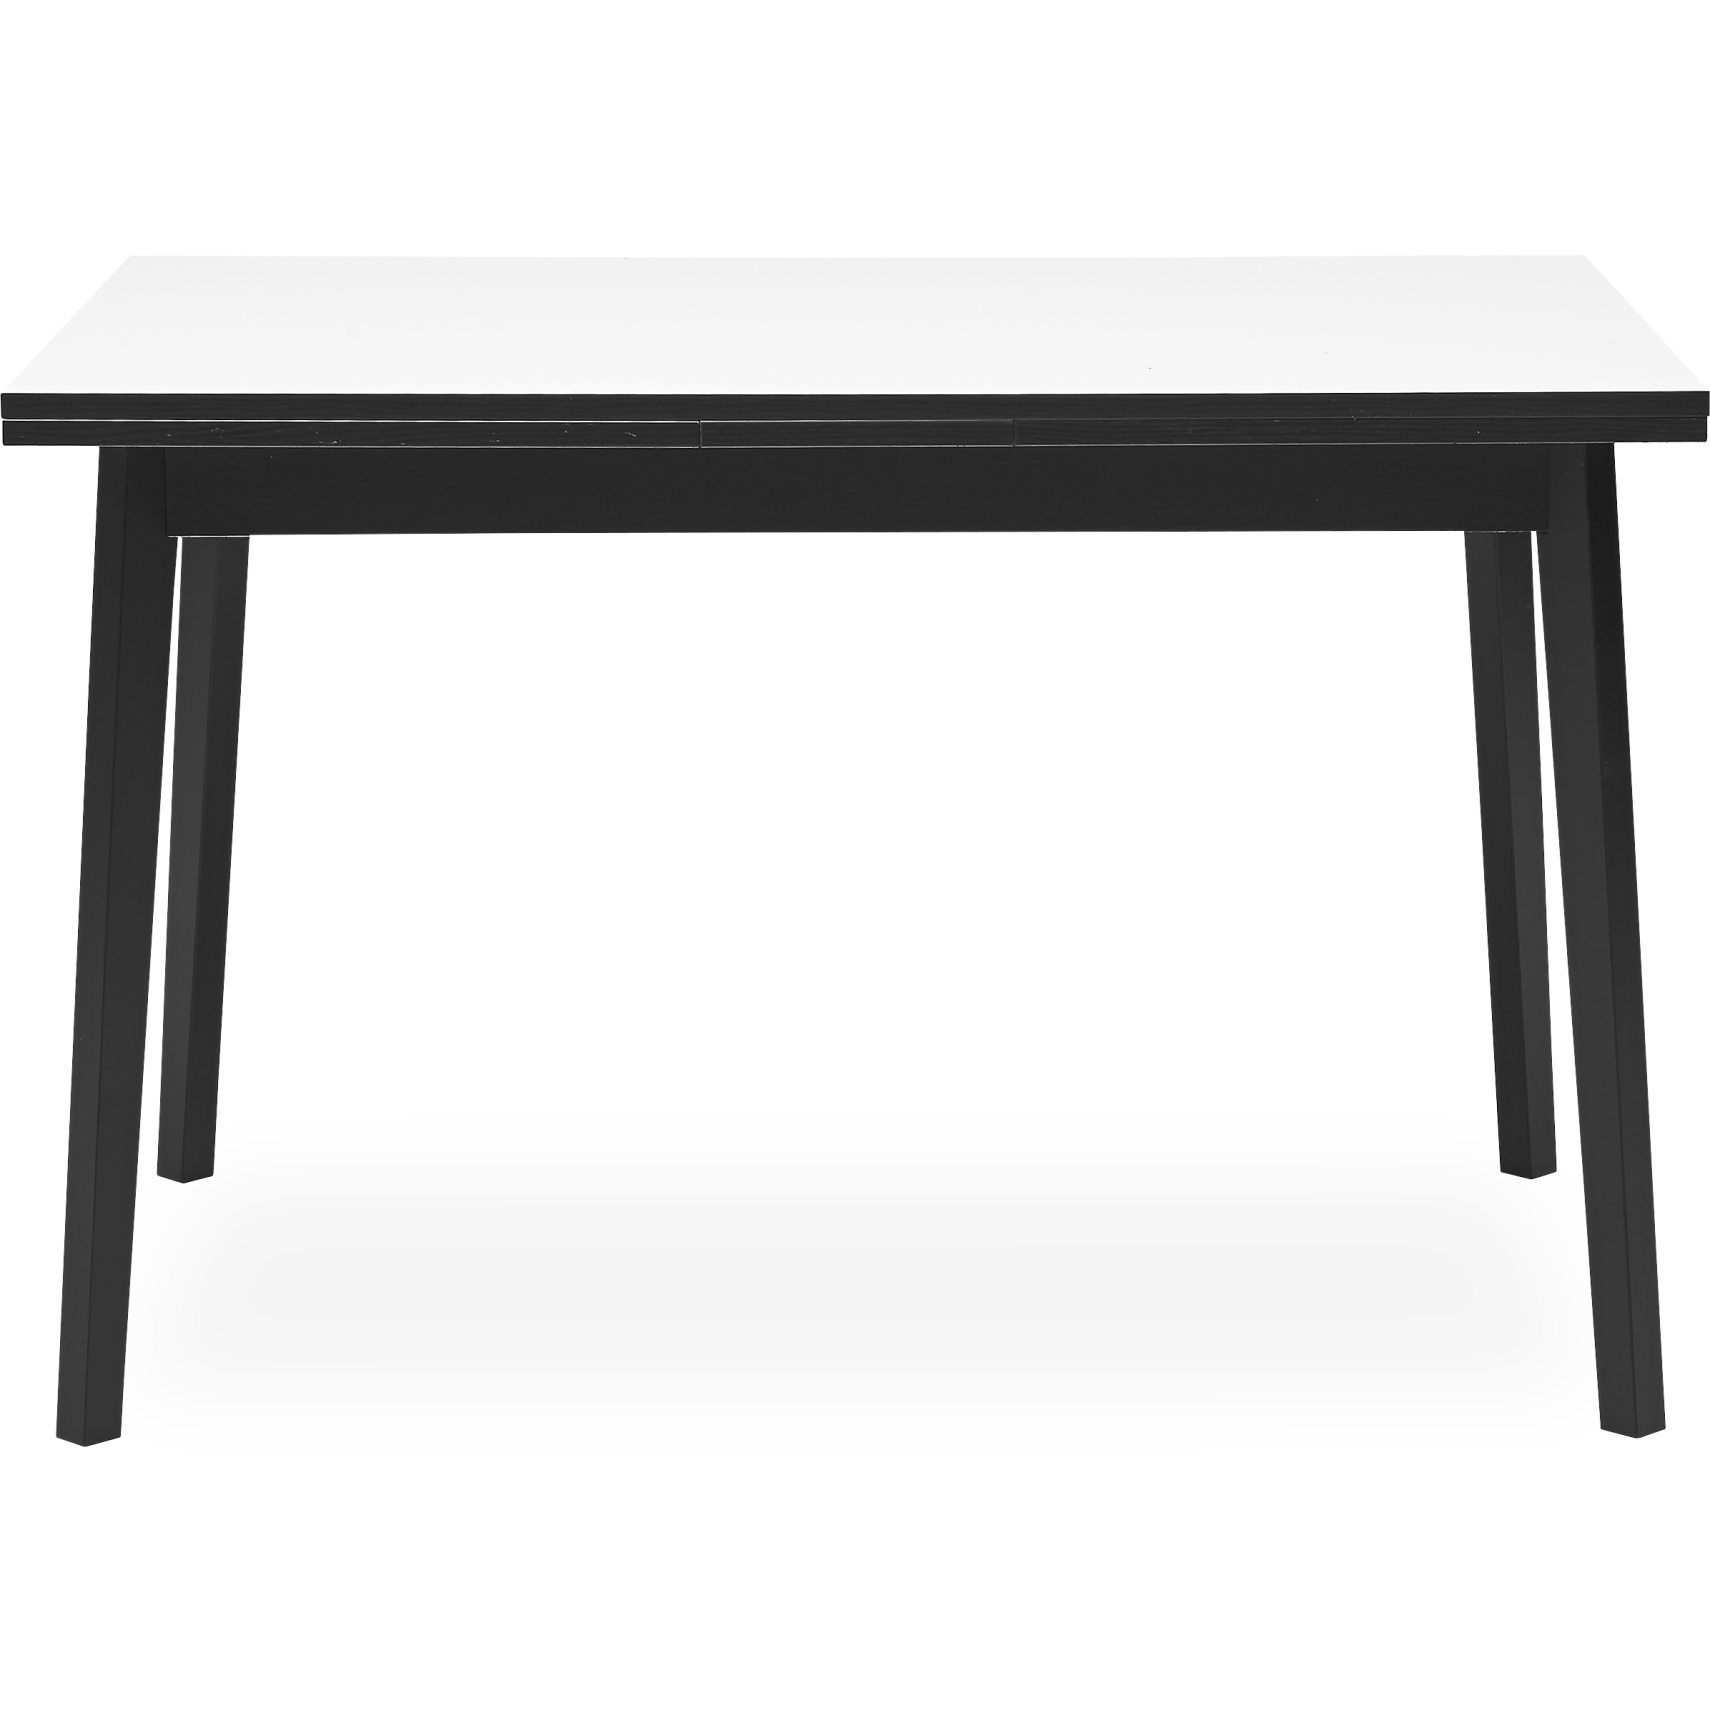 Single Matbord 120 x 80 x 76 cm - Vit melamin, svart kant och ben i svartbetsad ek